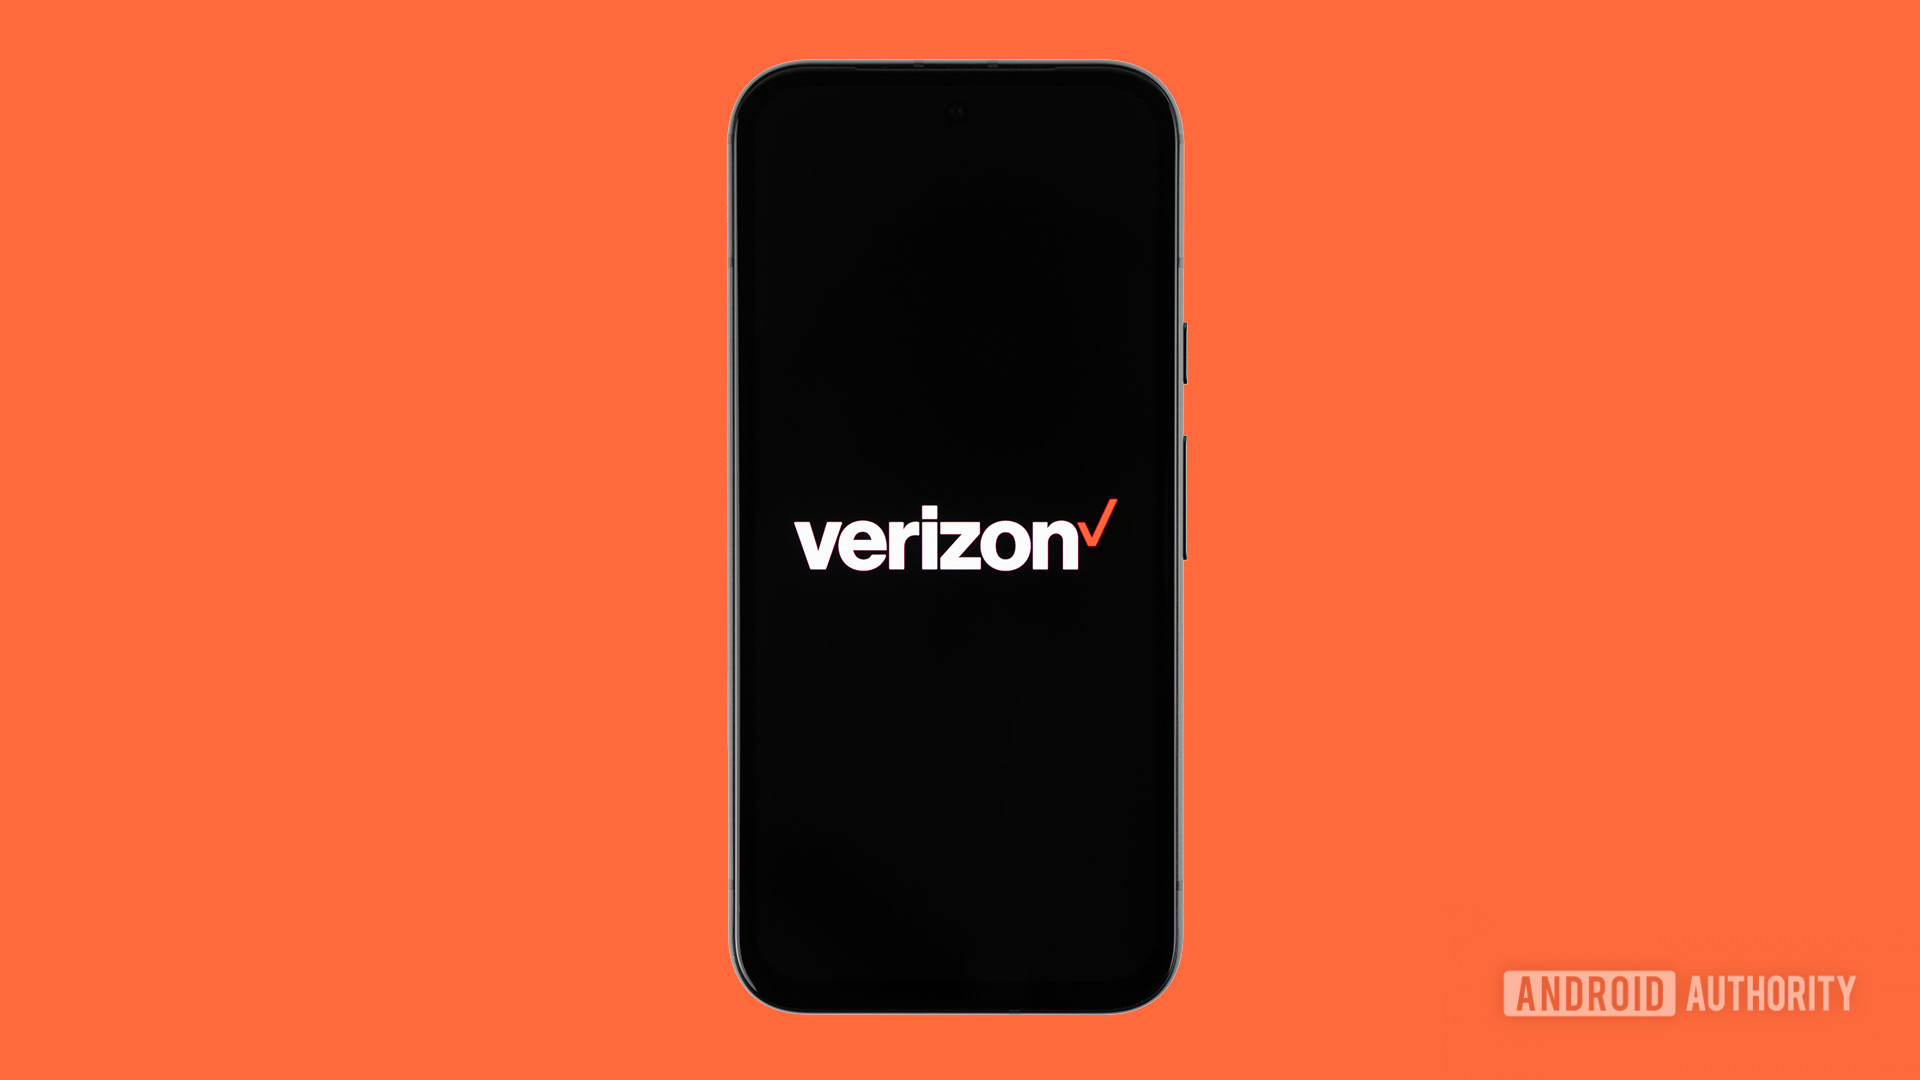 Verizon Wireless logo on smartphone with colored background stock photo